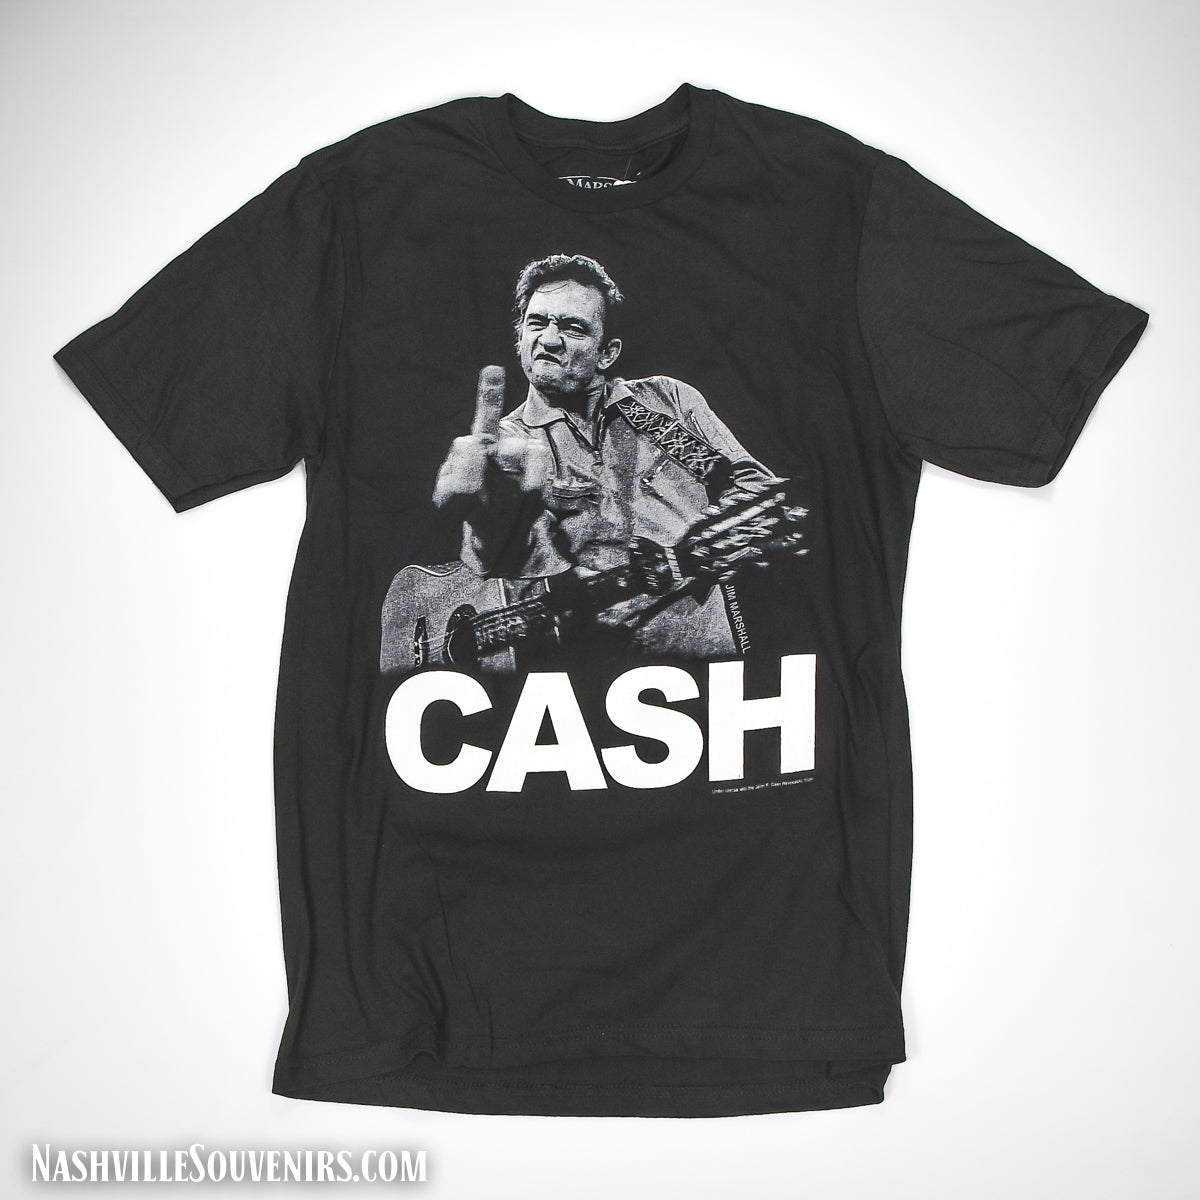 Johnny Cash "The Bird" T-shirt